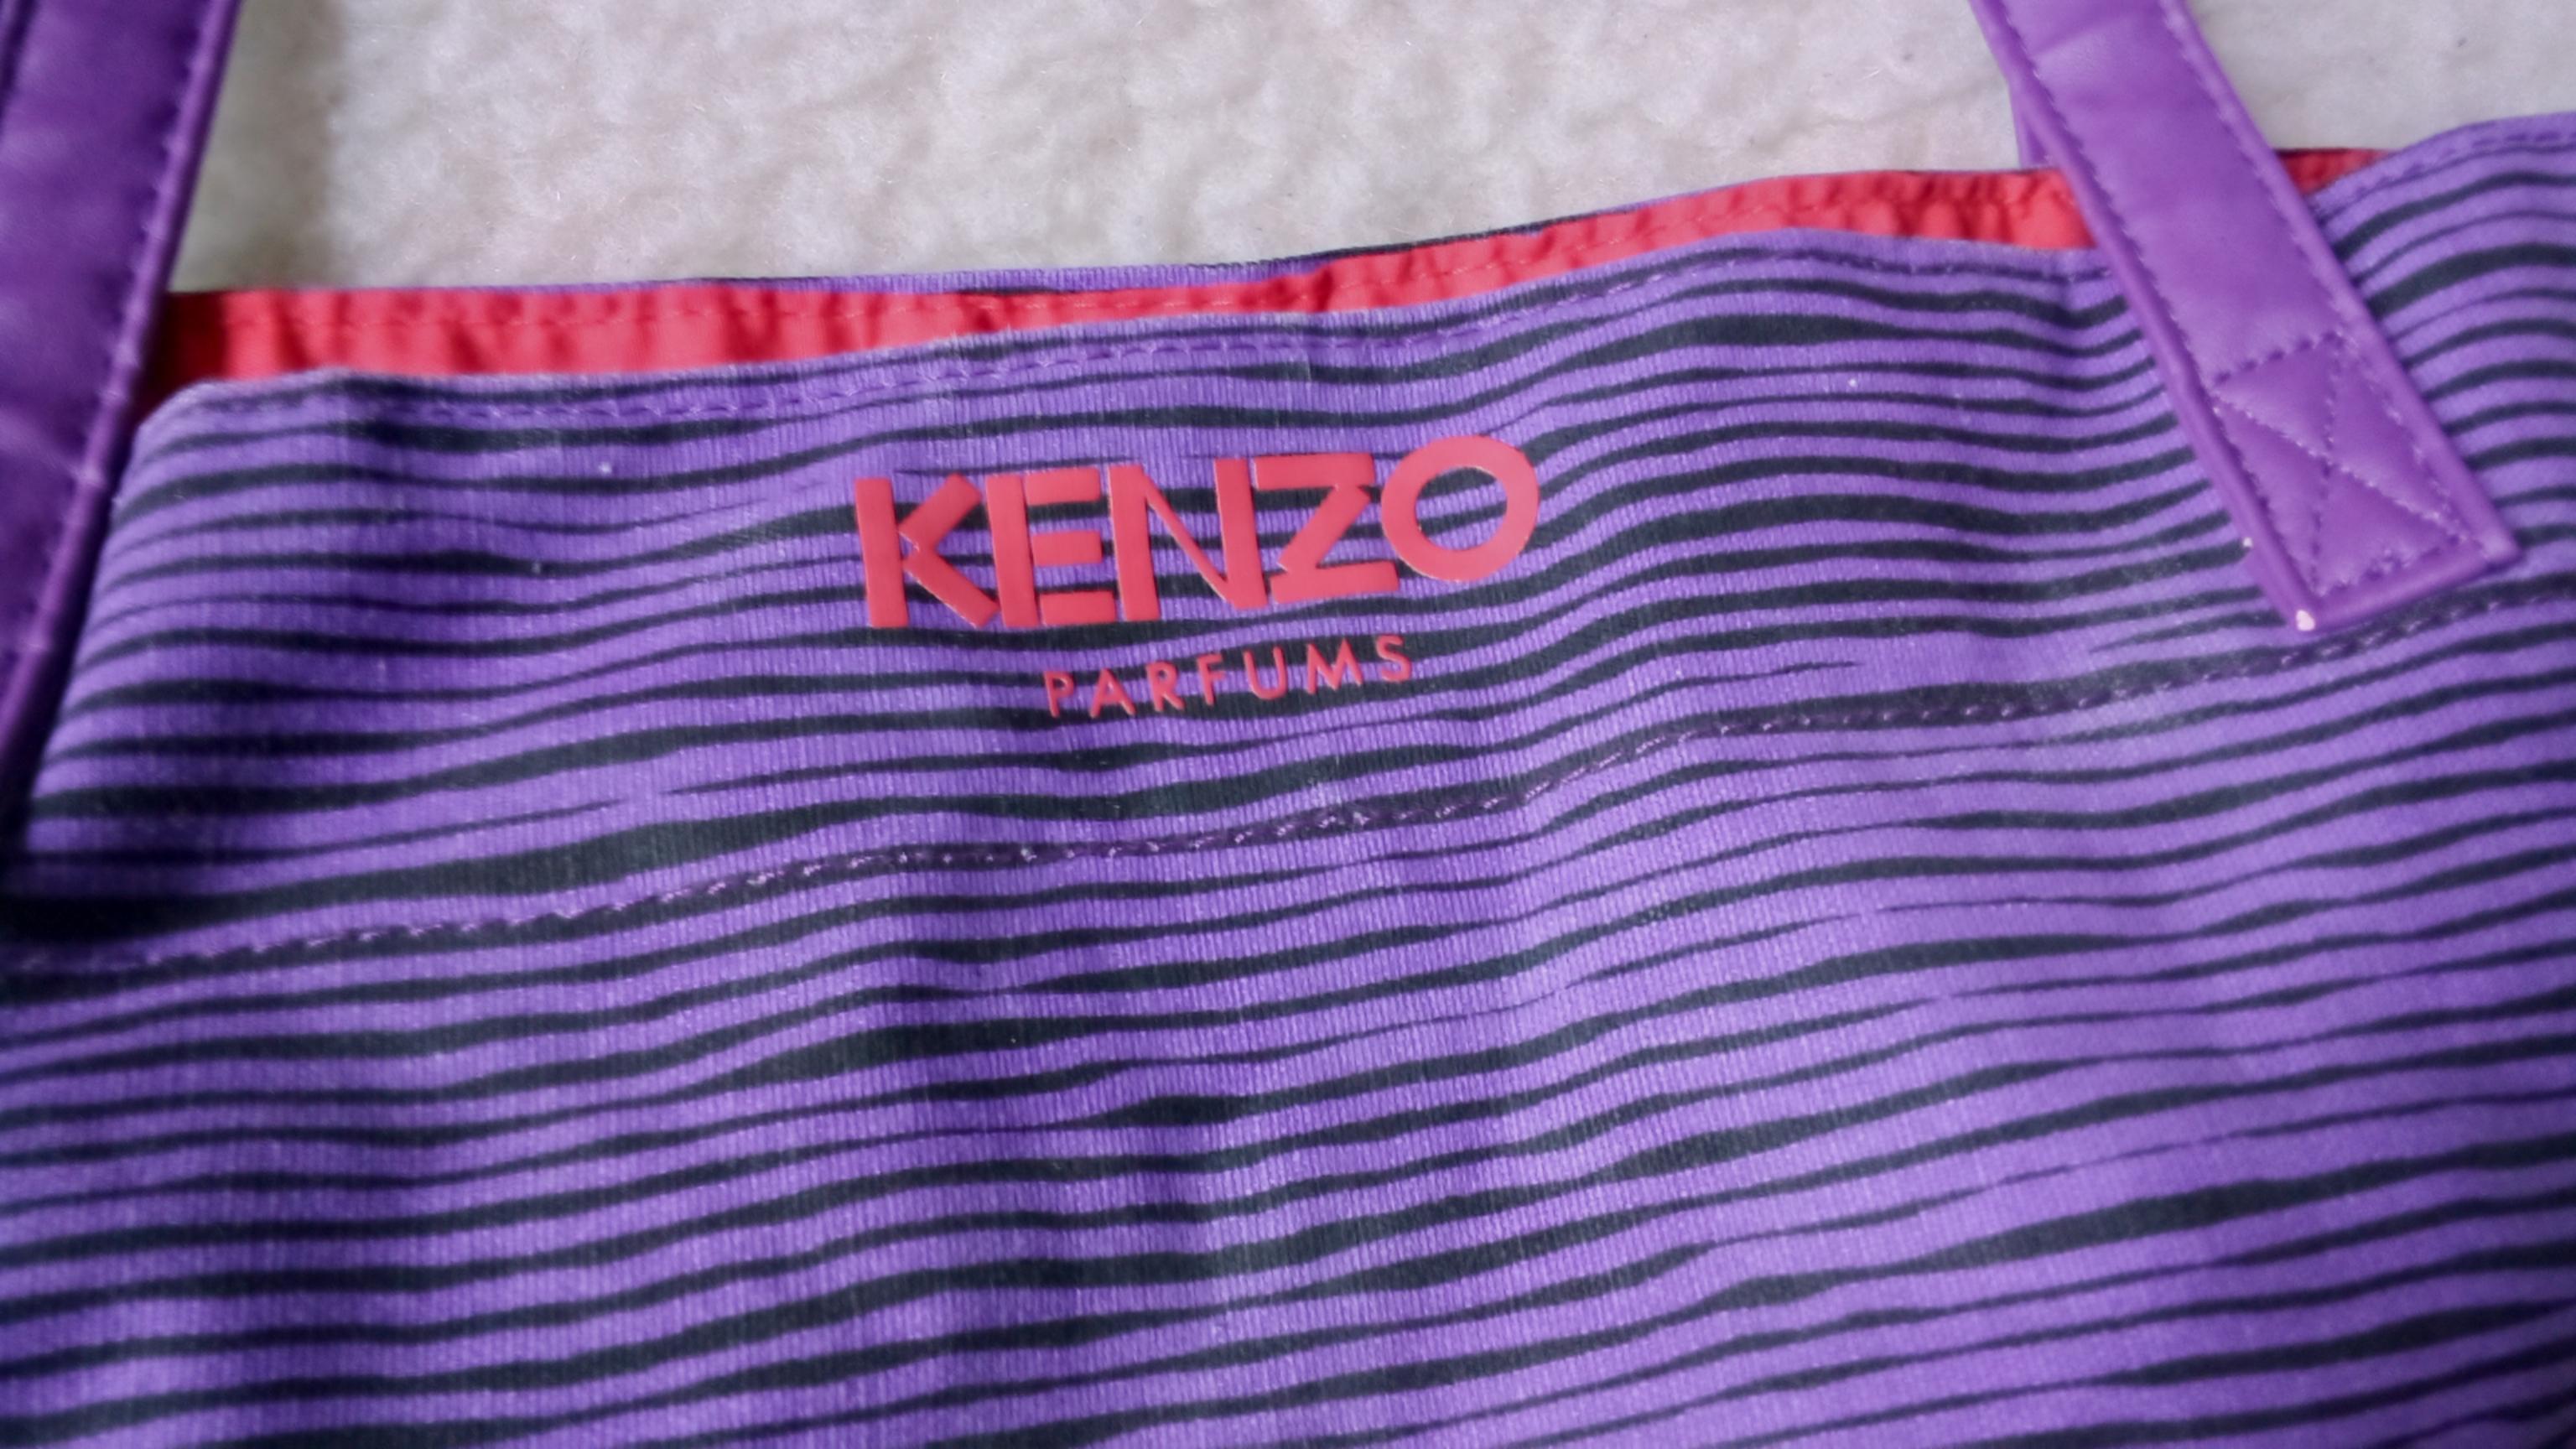 troc de troc sac kenzo parfum image 1